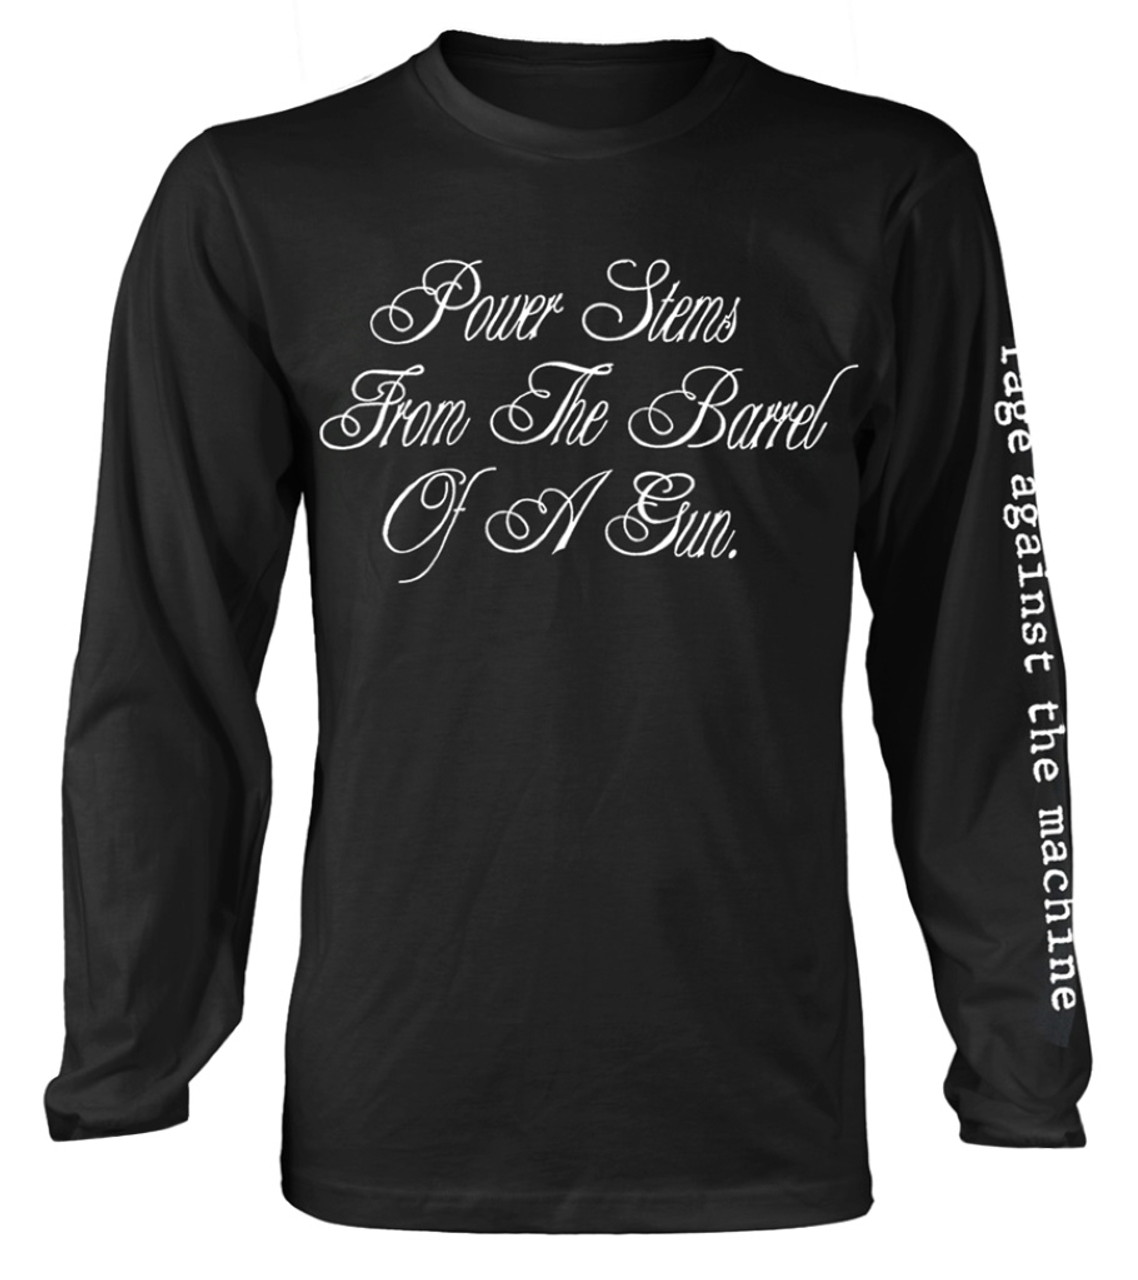 Rage Against The Machine 'Power Stems' (Black) Long Sleeve Shirt